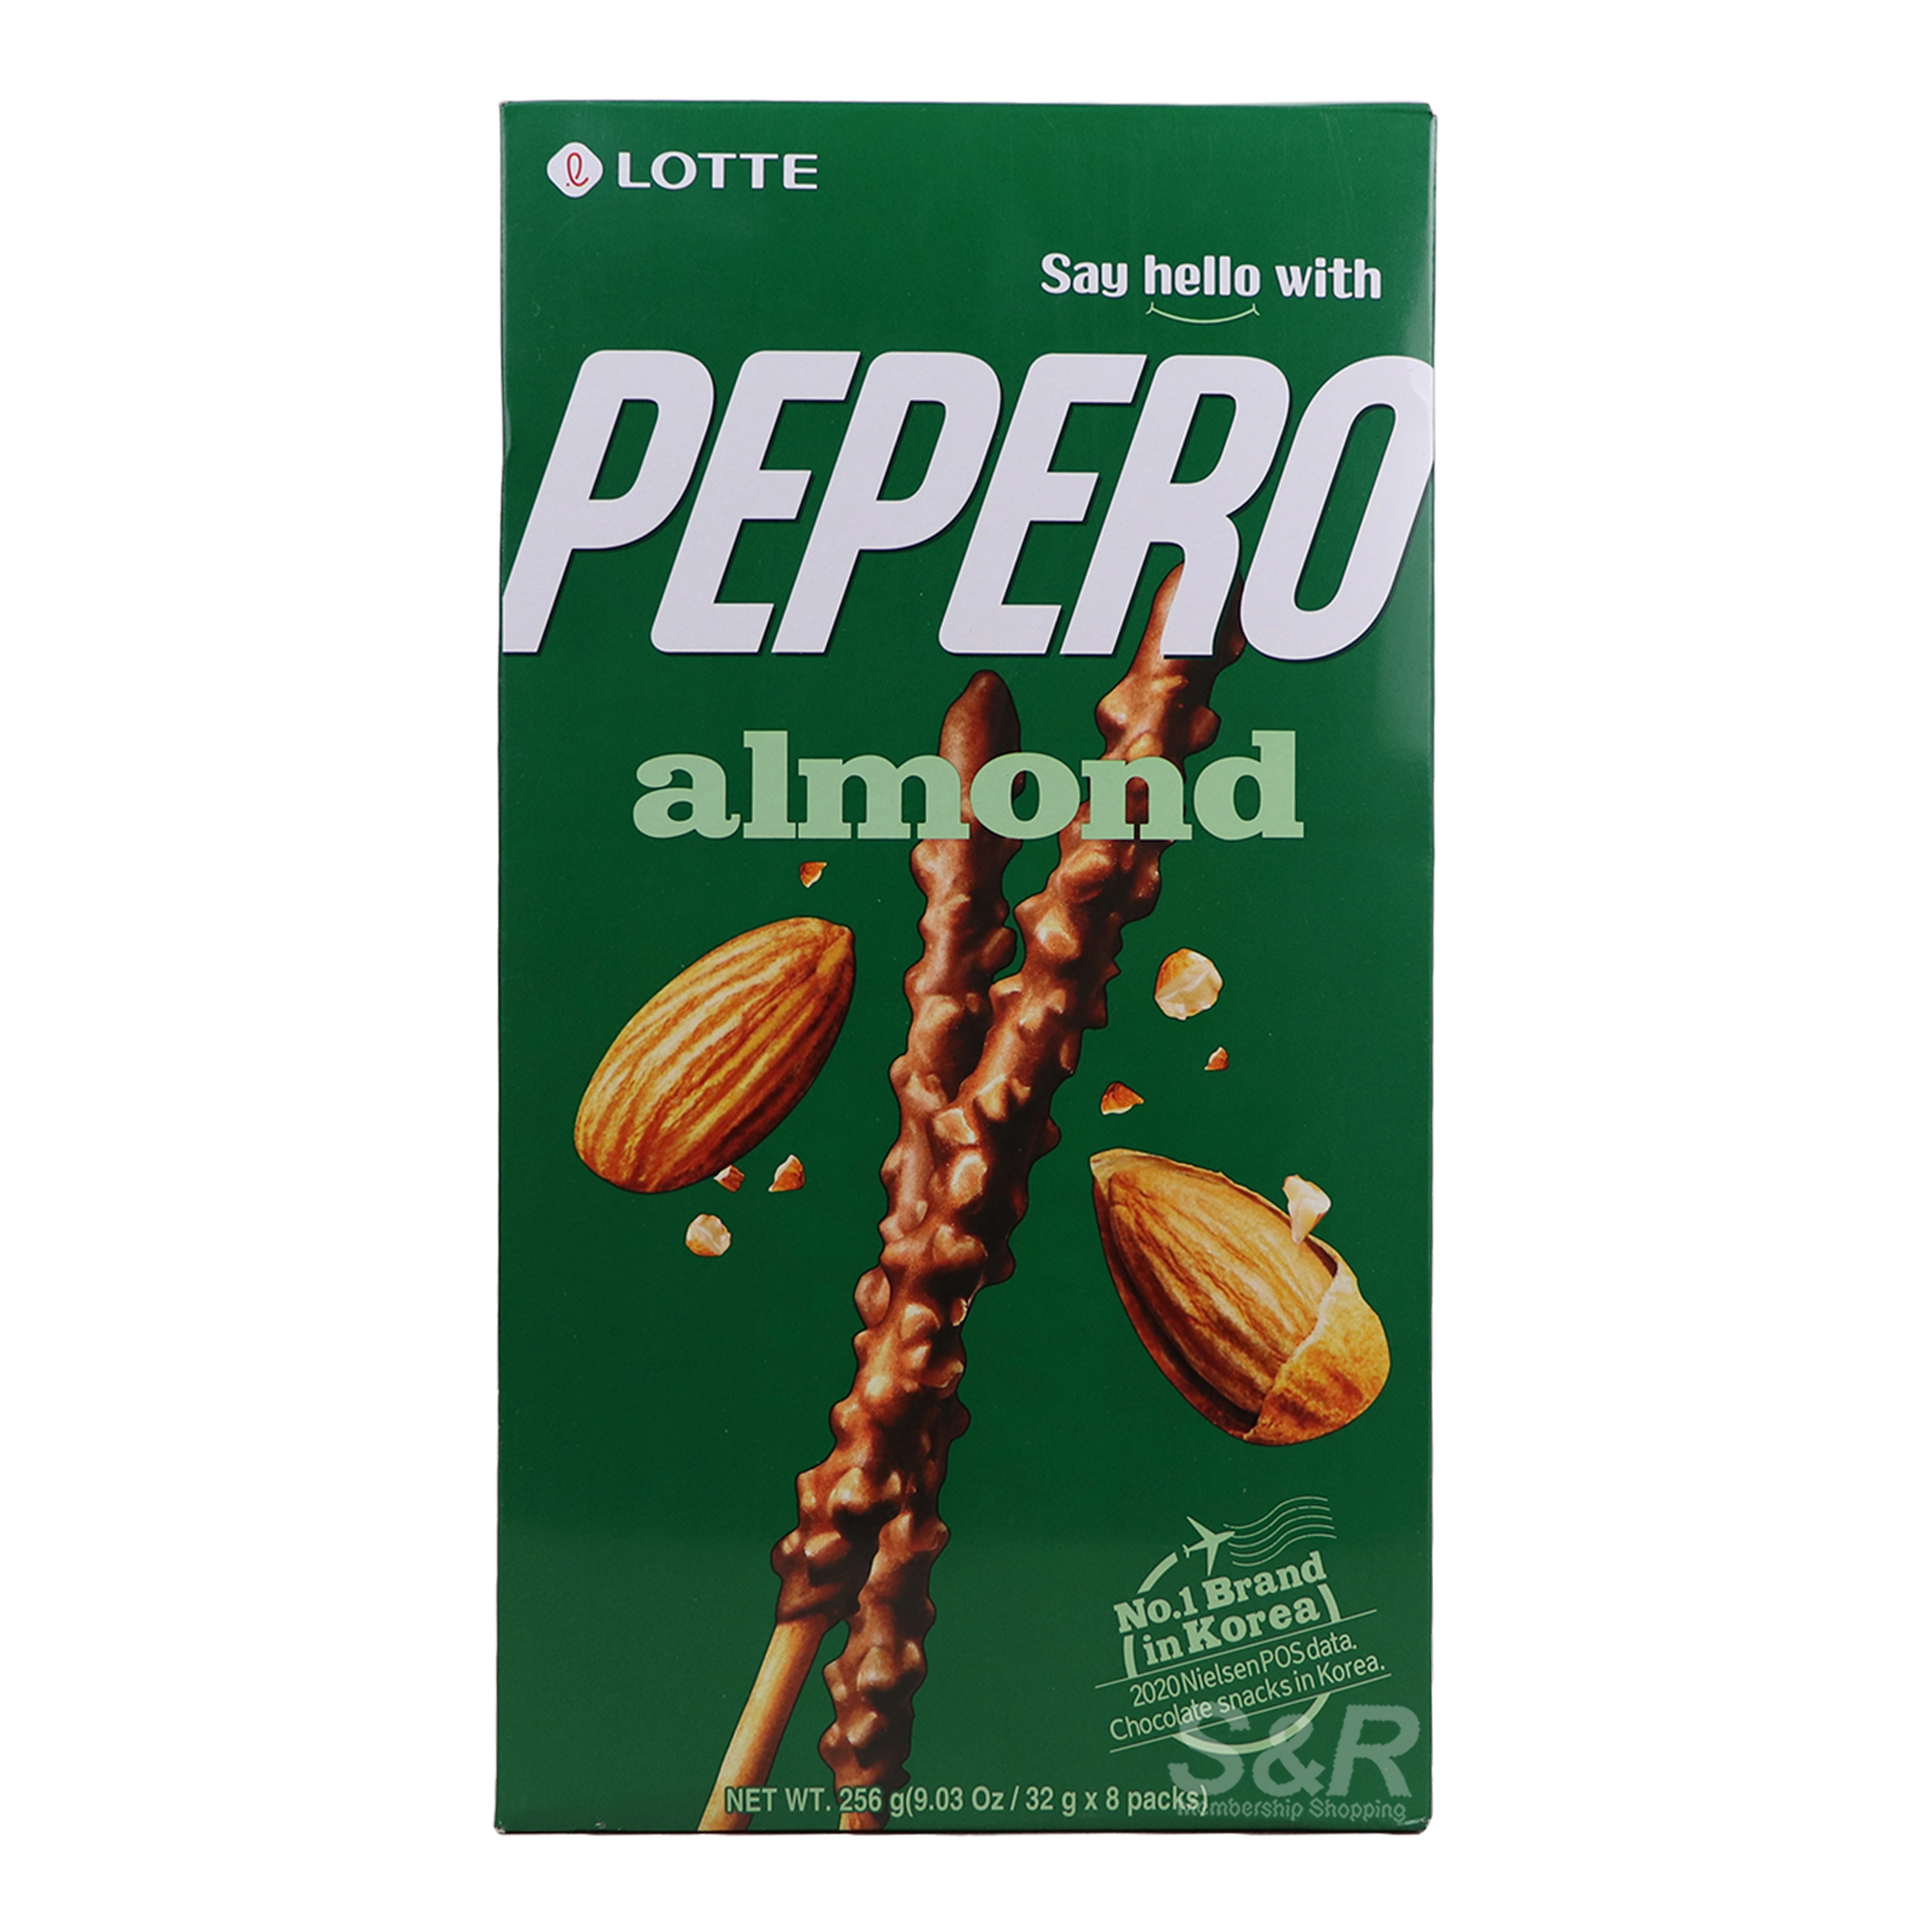 Lotte Pepero Almond and Chocolate 8 packs